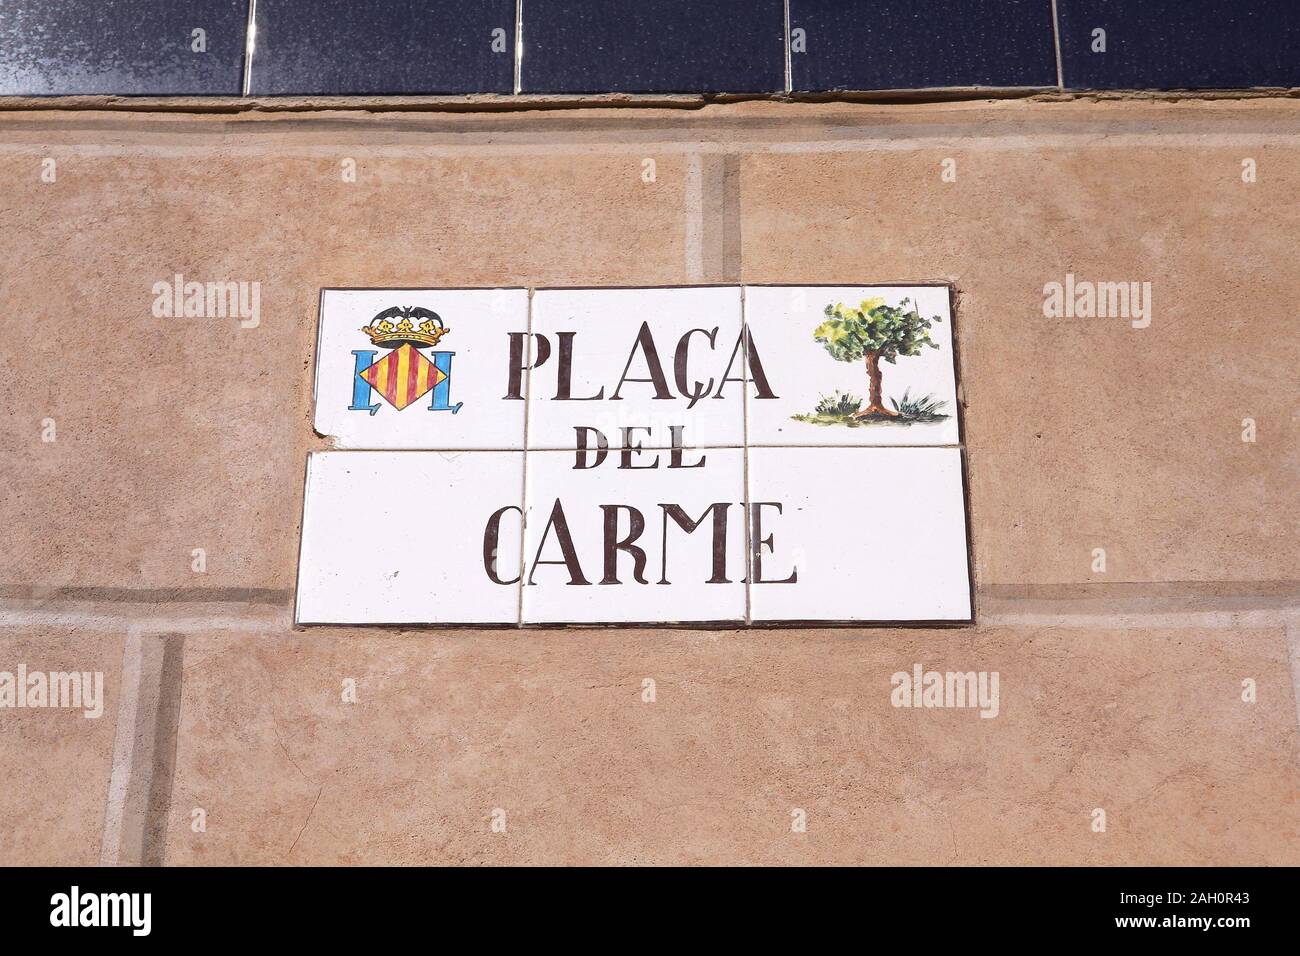 Valencia, Spain. Old stylish ceramic street sign - Carme Square. Stock Photo